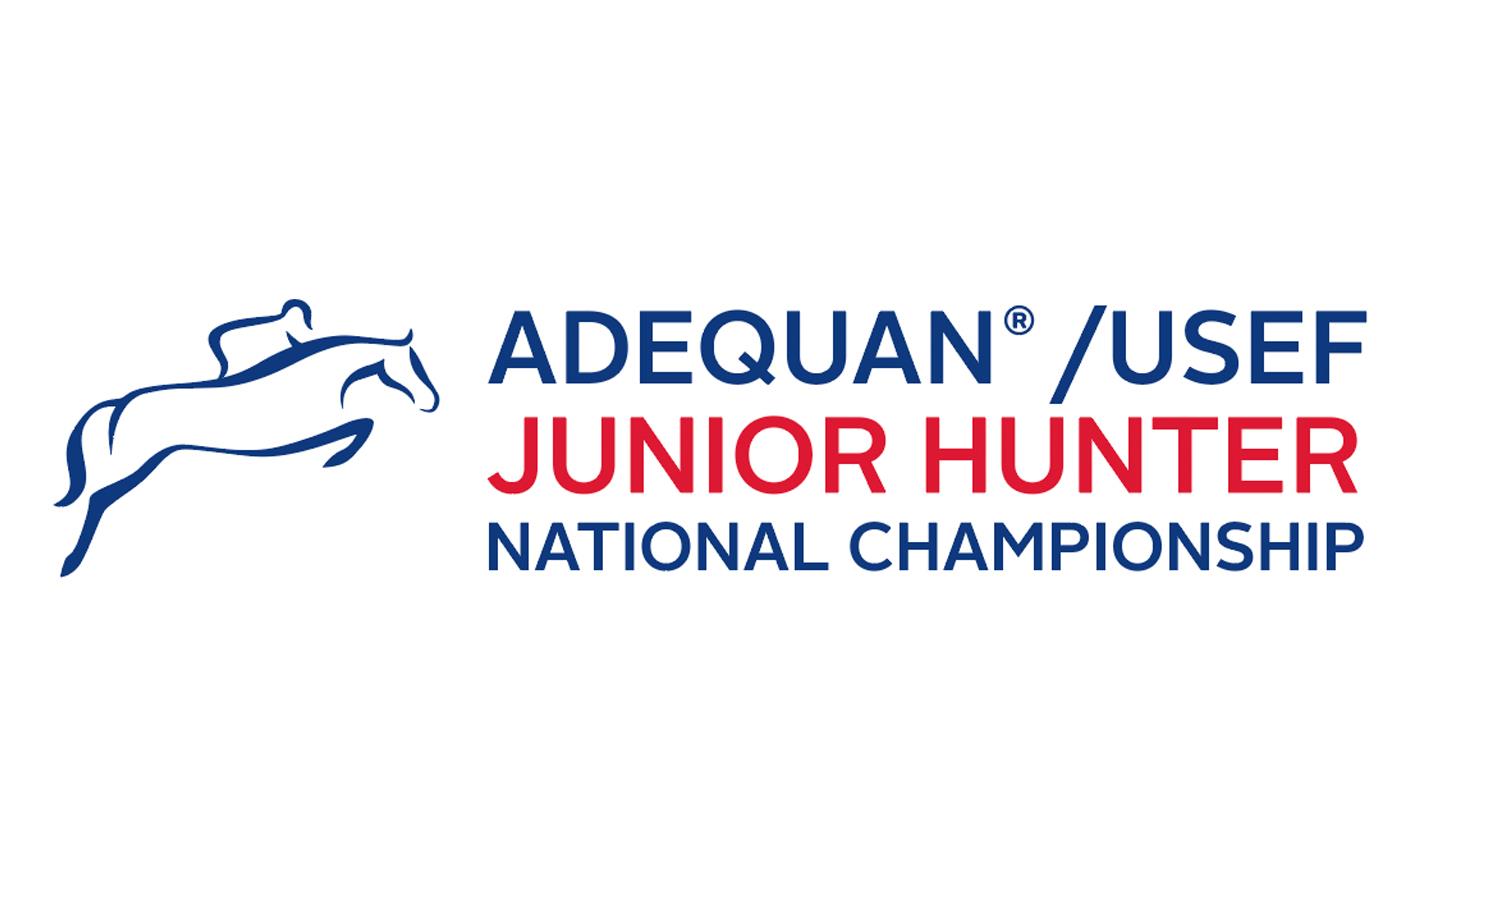 usef-grant-recipients-announced-for-2023-adequan-usef-junior-hunter